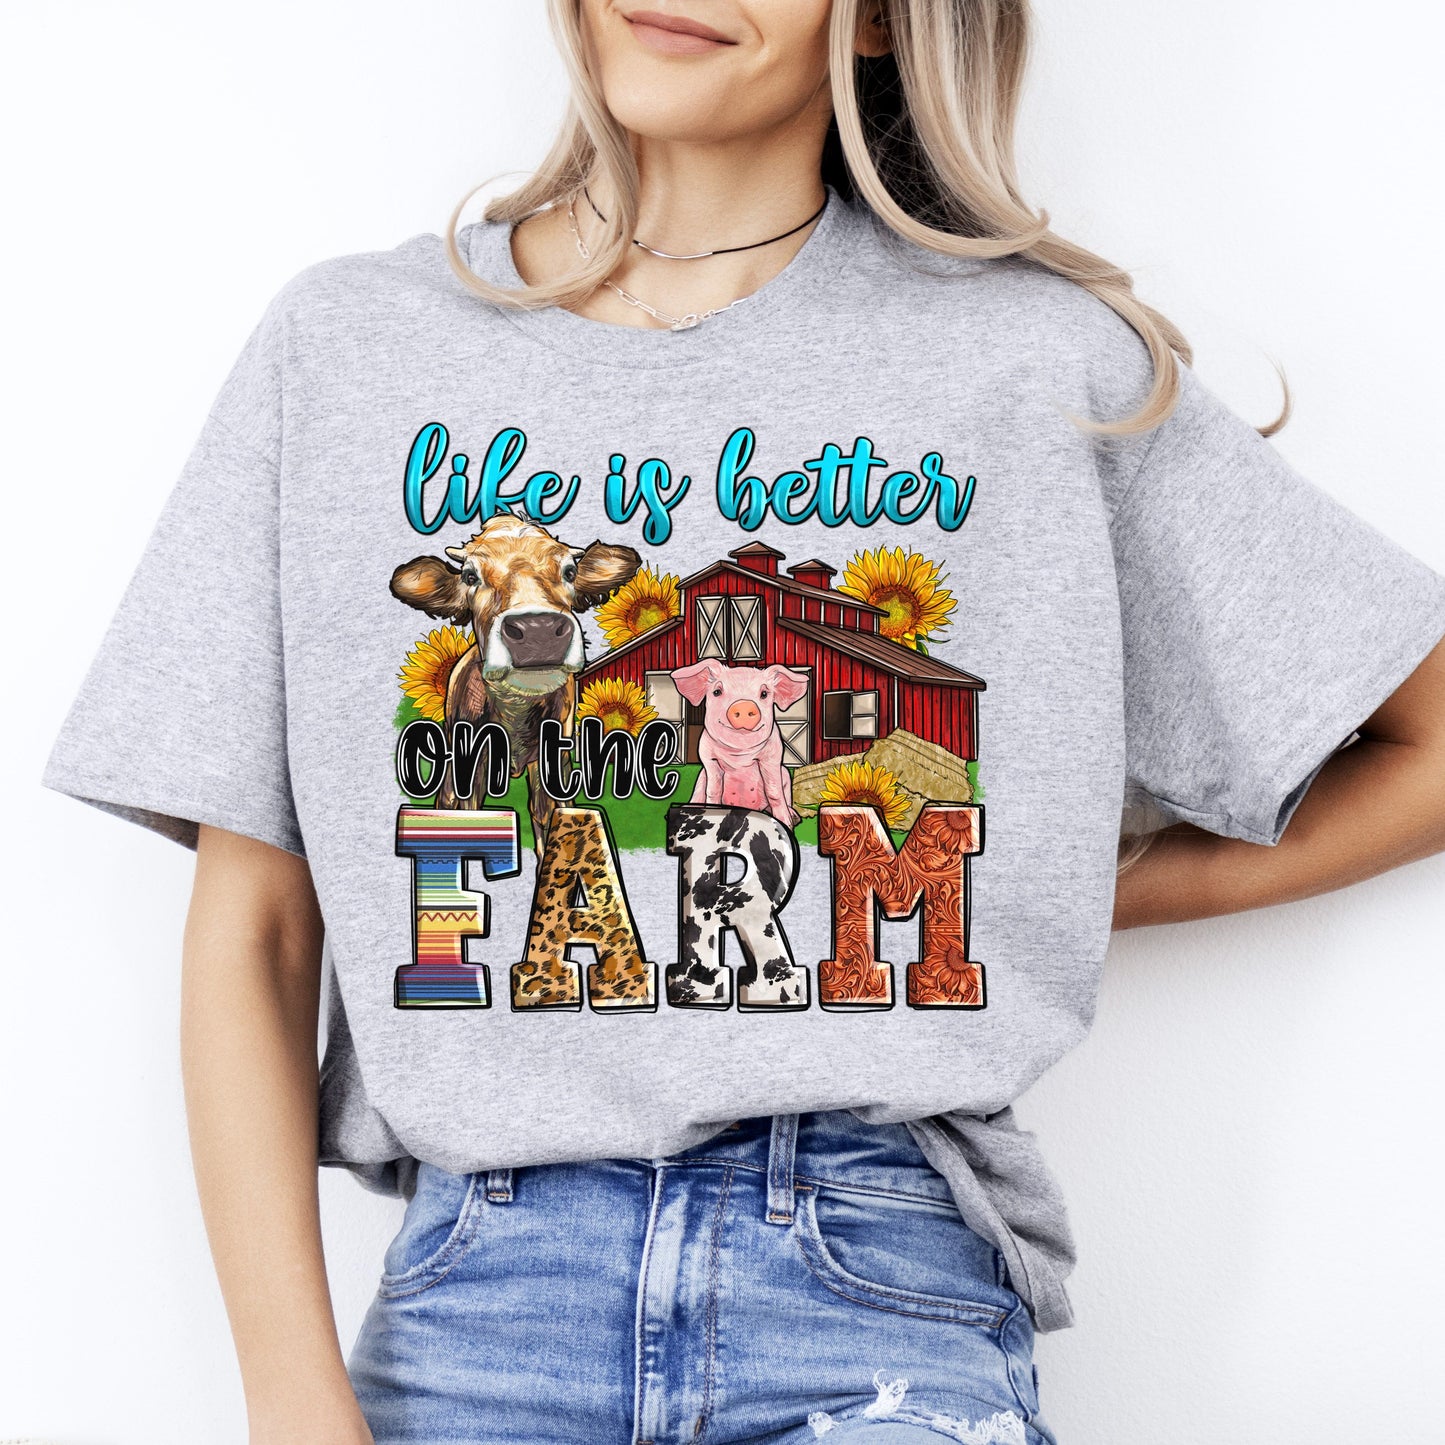 Life is better on the farm T-Shirt gift Cow pig farmer girl Unisex Tee Sand White Sport Grey-Sport Grey-Family-Gift-Planet